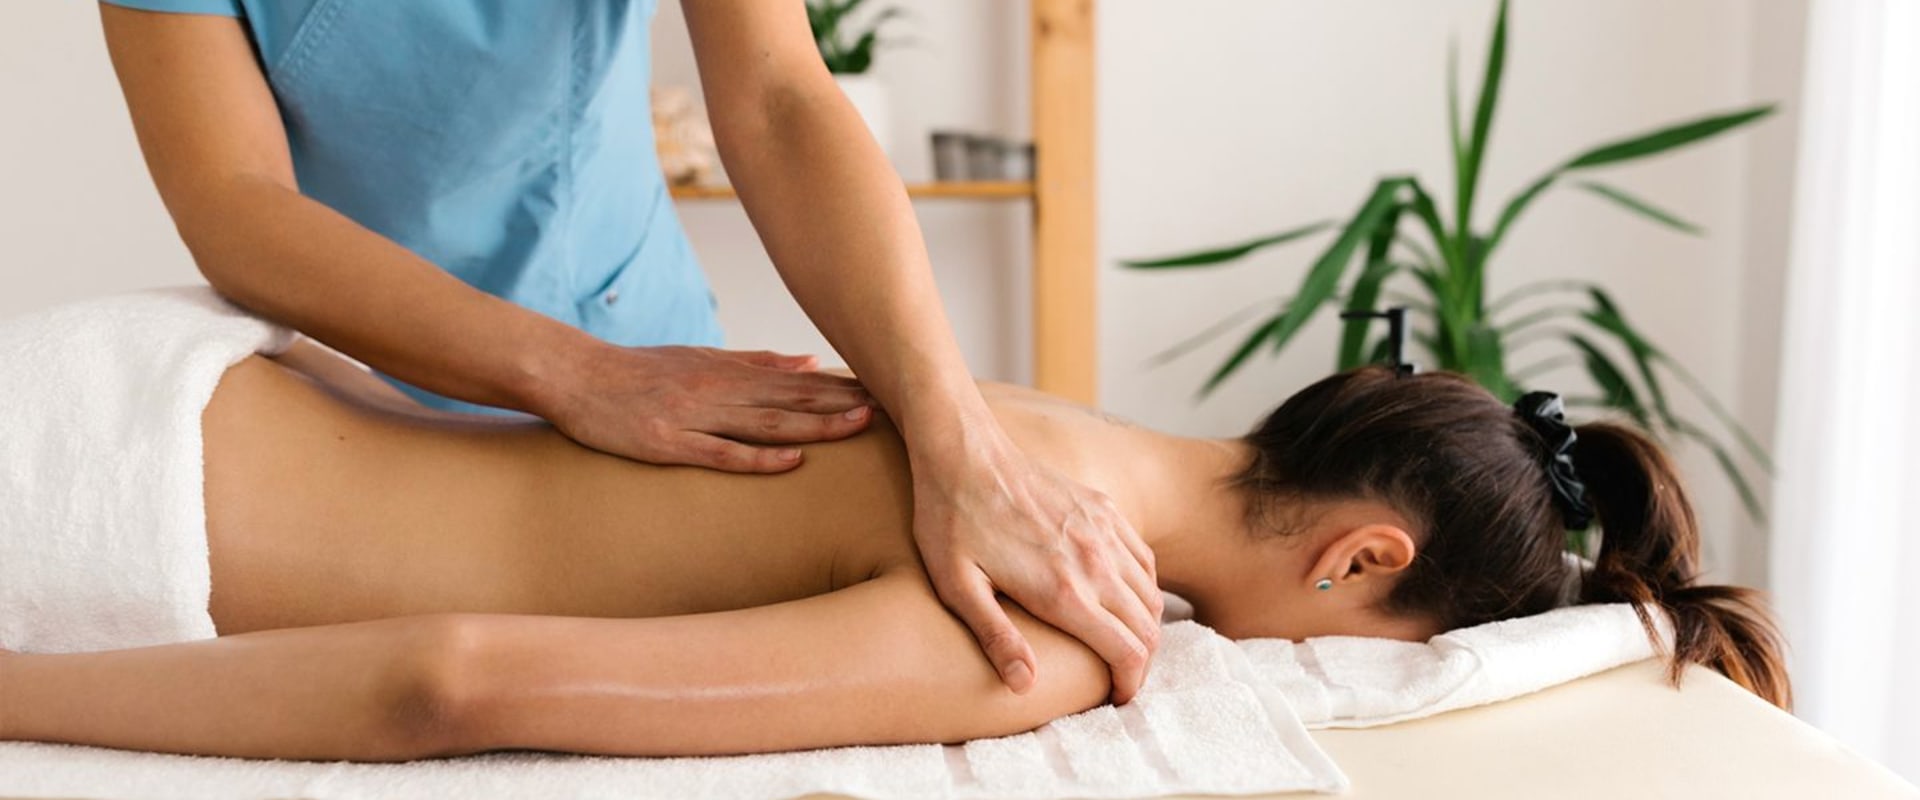 What's massage therapist?